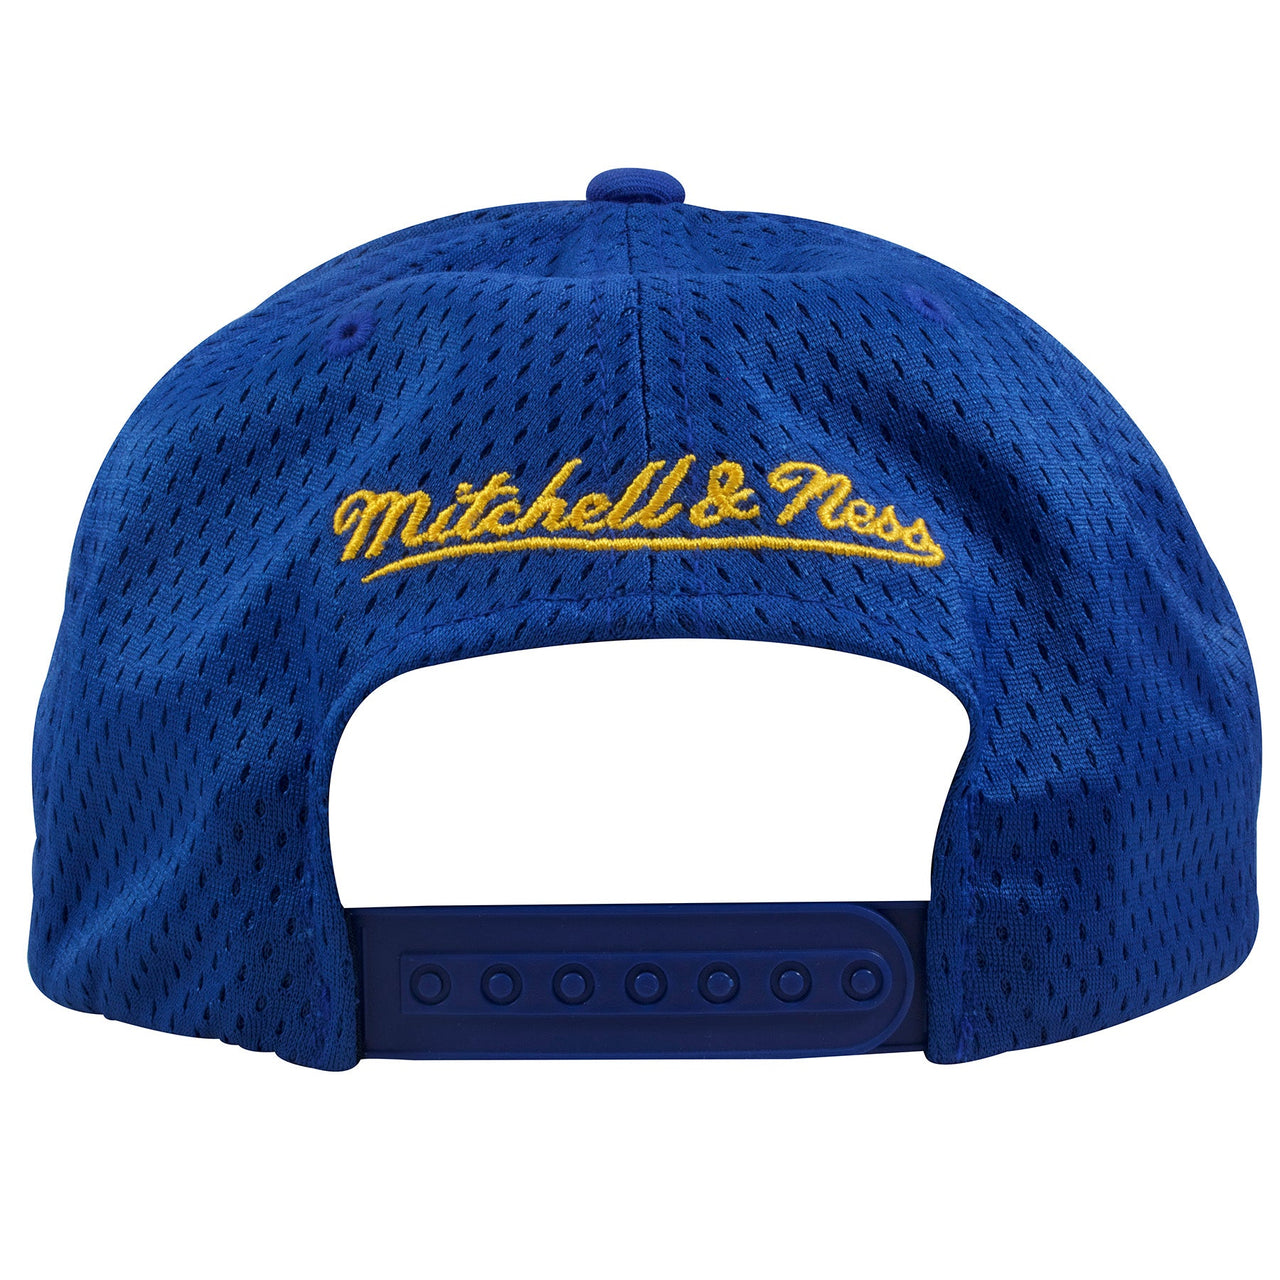 Golden State Warriors Royal Blue Mesh Jersey Snapback Hat